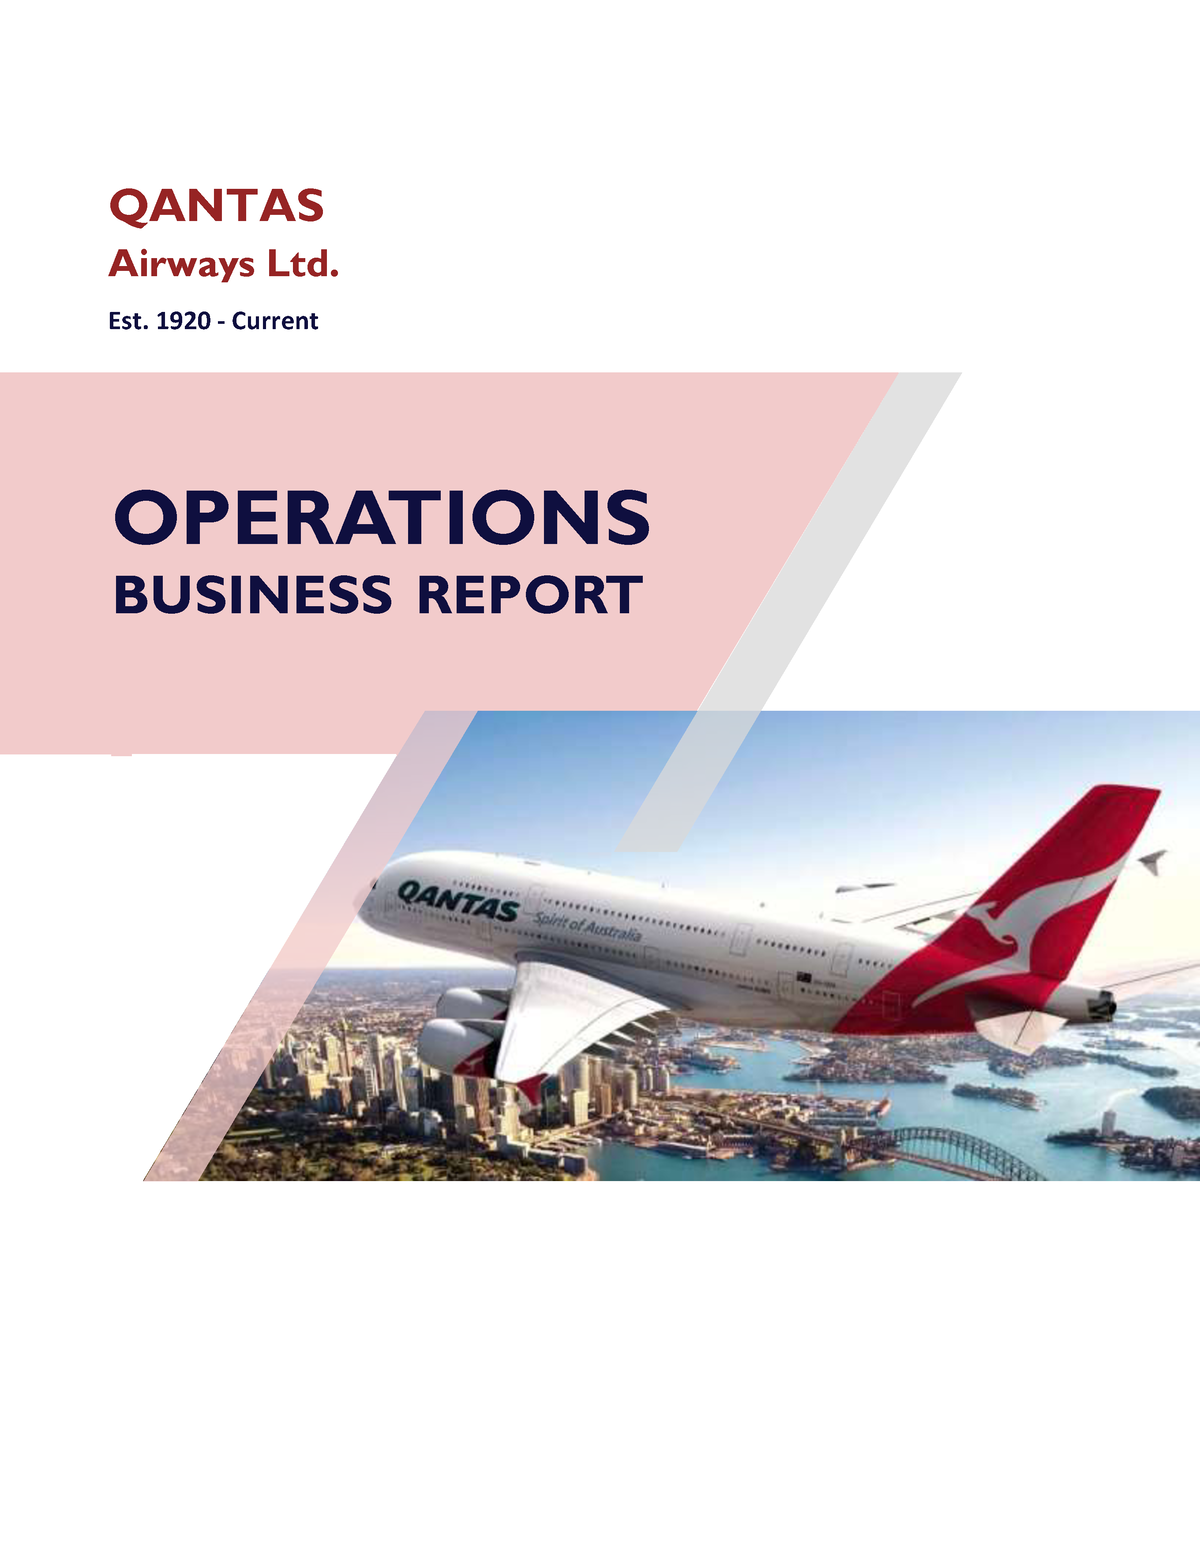 qantas case study business studies